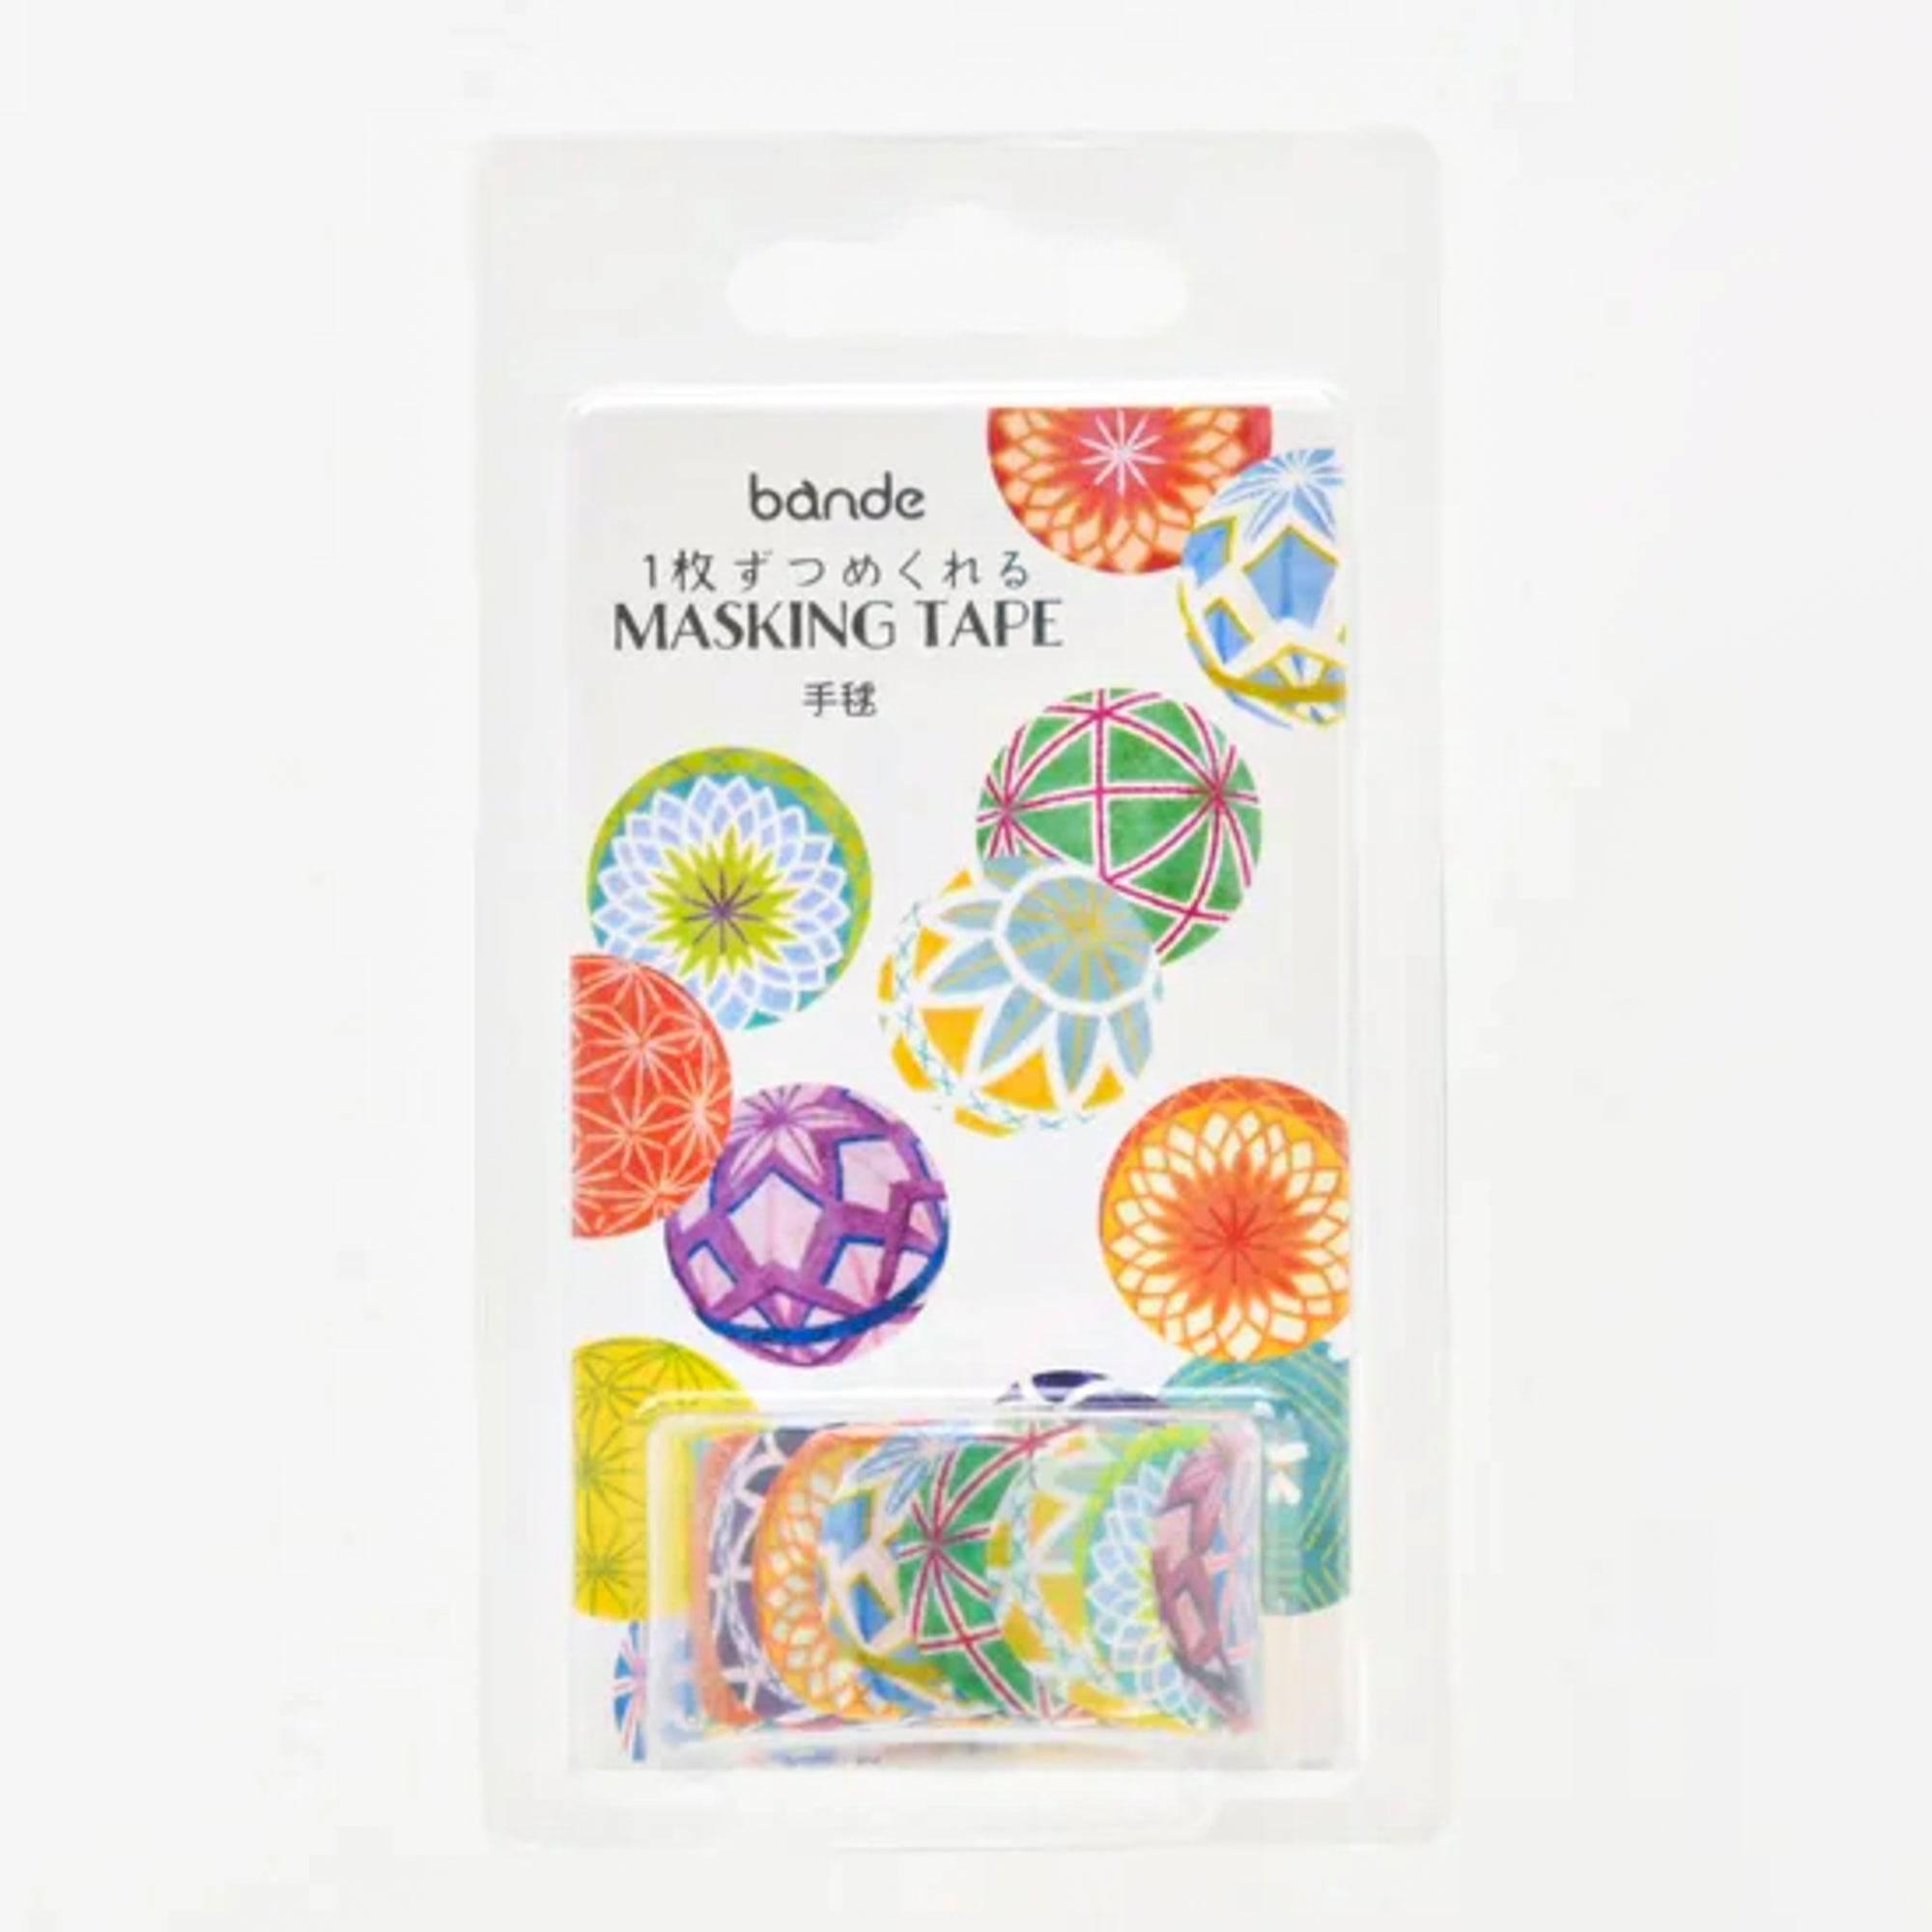 Temari Washi Tape Sticker Roll - Bande - Komorebi Stationery